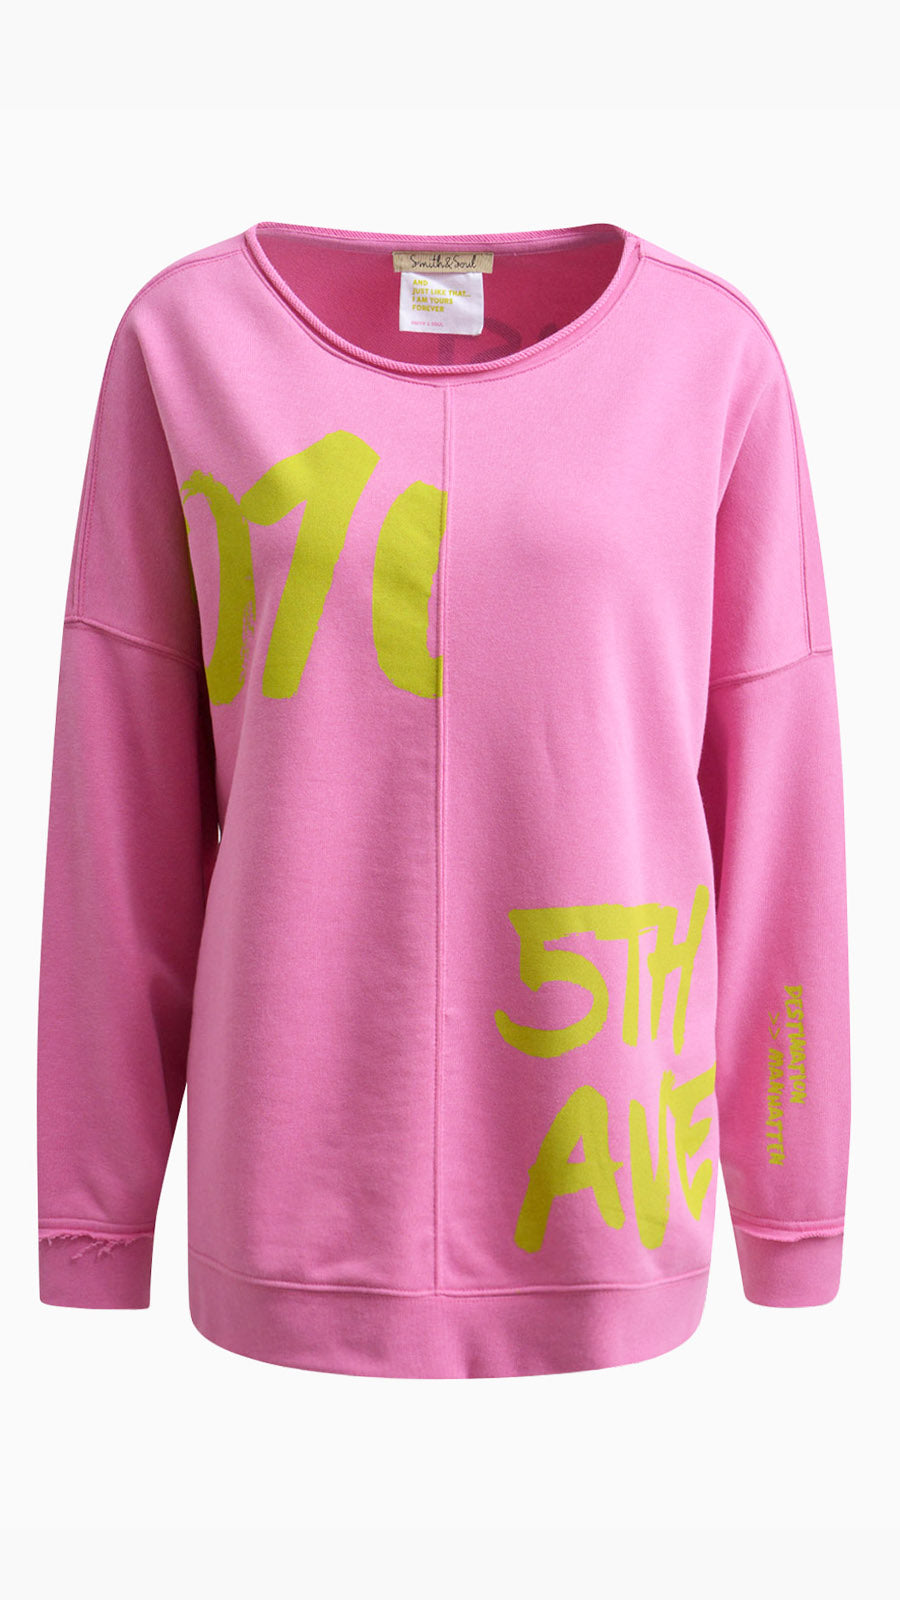 5th Avenue Sweatshirt (Soft pink) by Smith & Soul - last 1